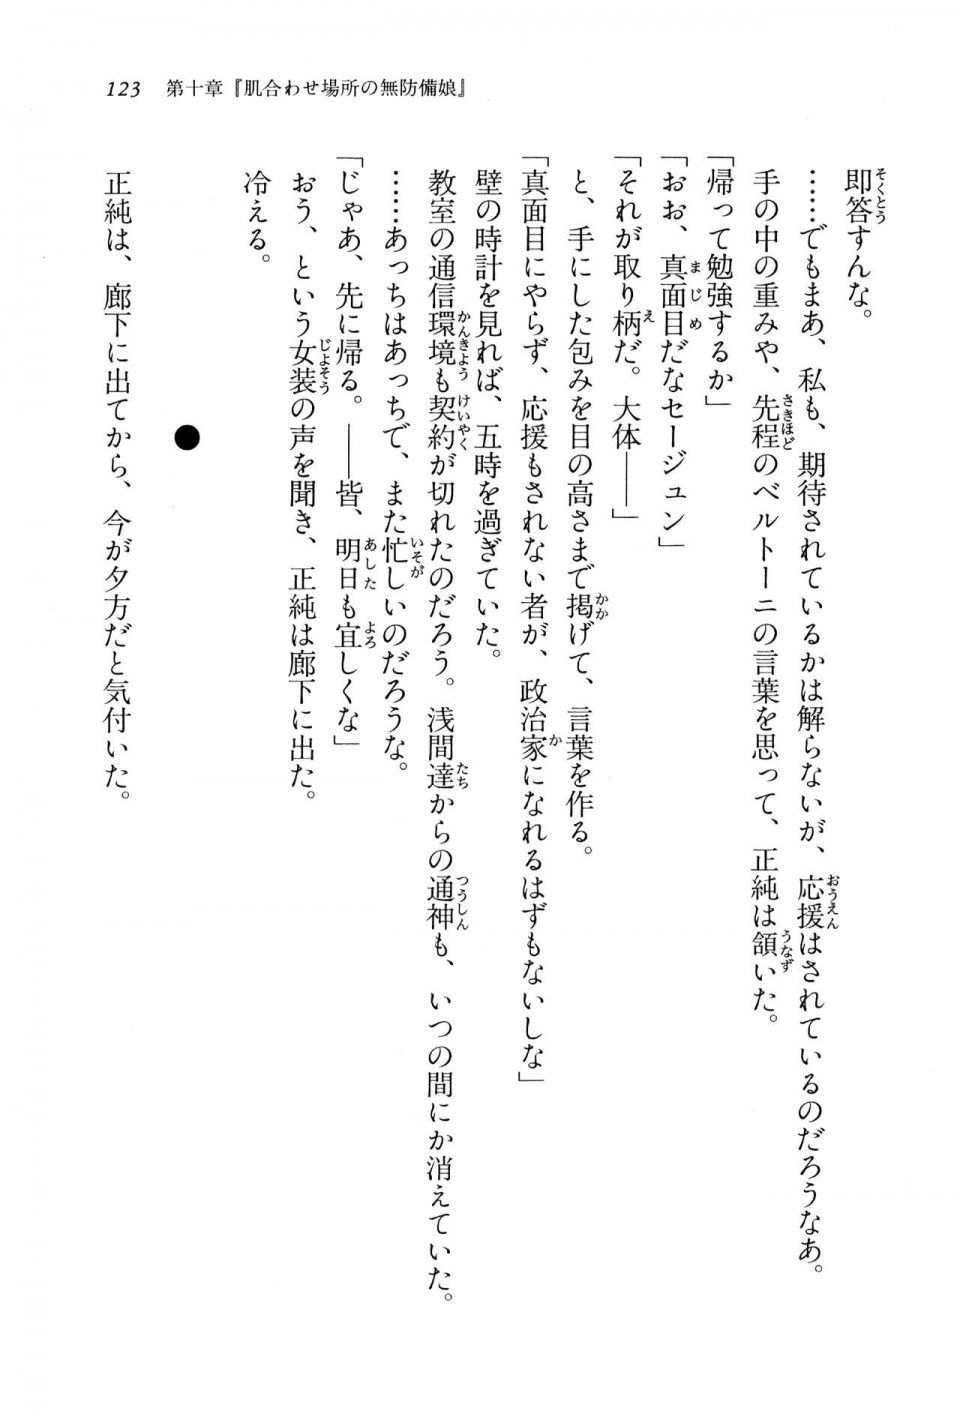 Kyoukai Senjou no Horizon BD Special Mininovel Vol 8(4B) - Photo #127